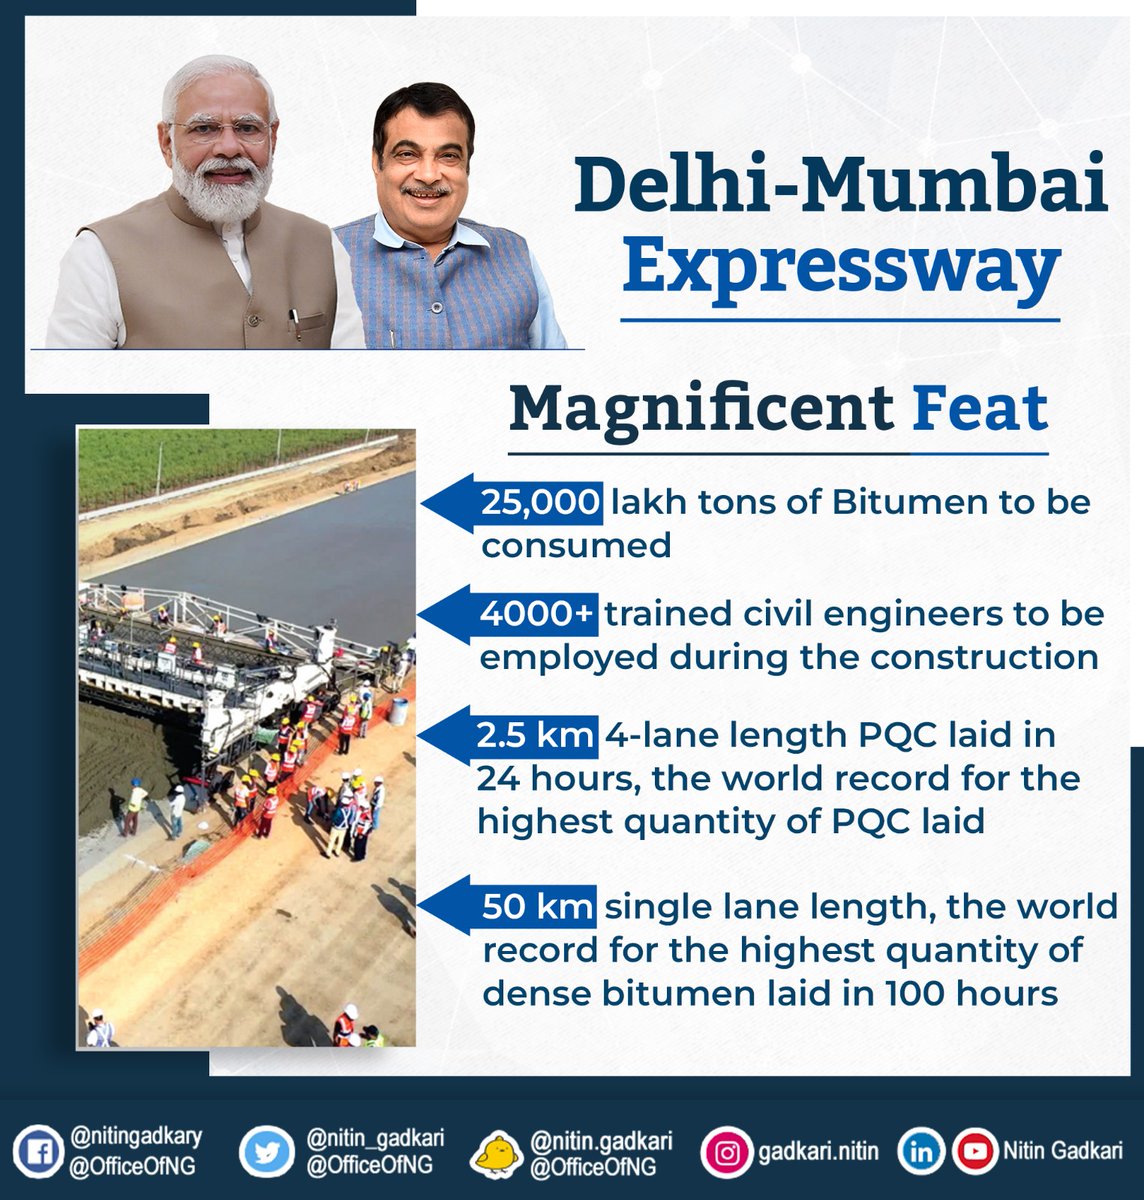 The #Delhi_Mumbai_Expressway Construction has to be consumed ₹25,000 lakh tons of Bitumen while 4000+ trained civil engineers will be employed during work. #BuildingTheNation #PragatiKaHighway #GatiShakti